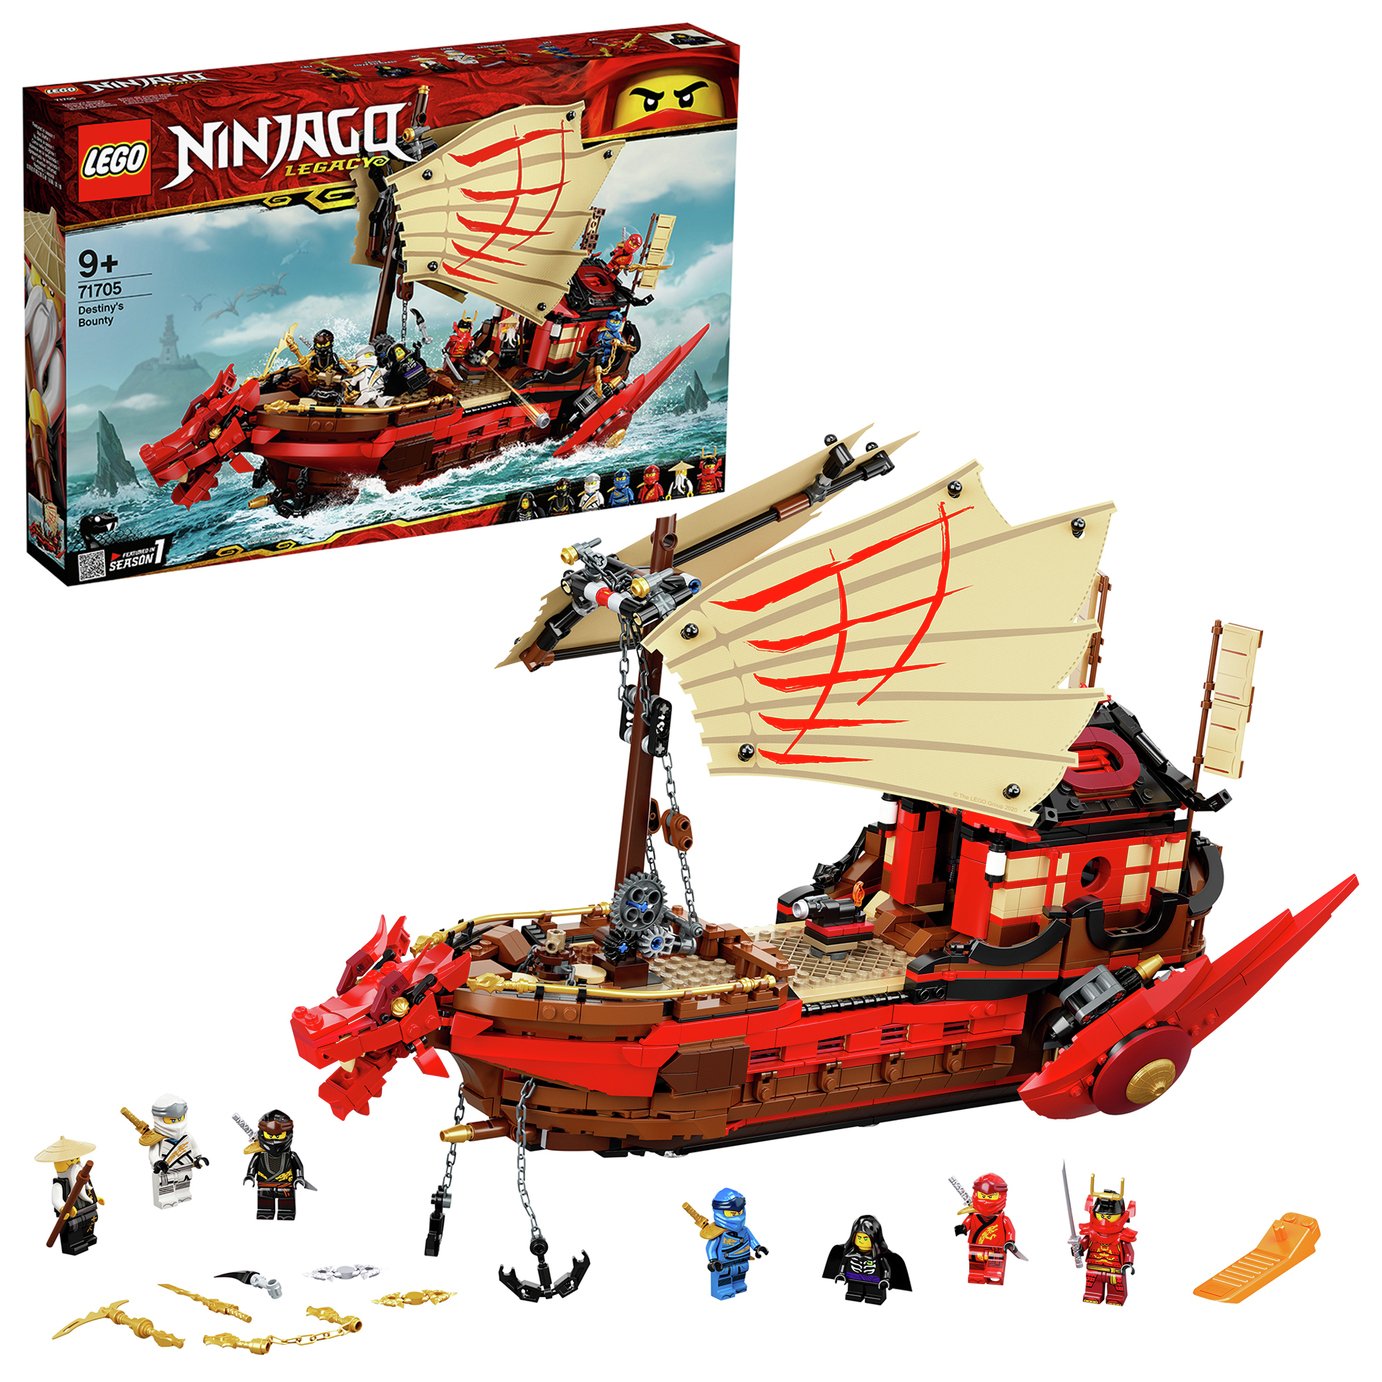 LEGO Ninjago Legacy Destiny's Bounty Ship Set Review